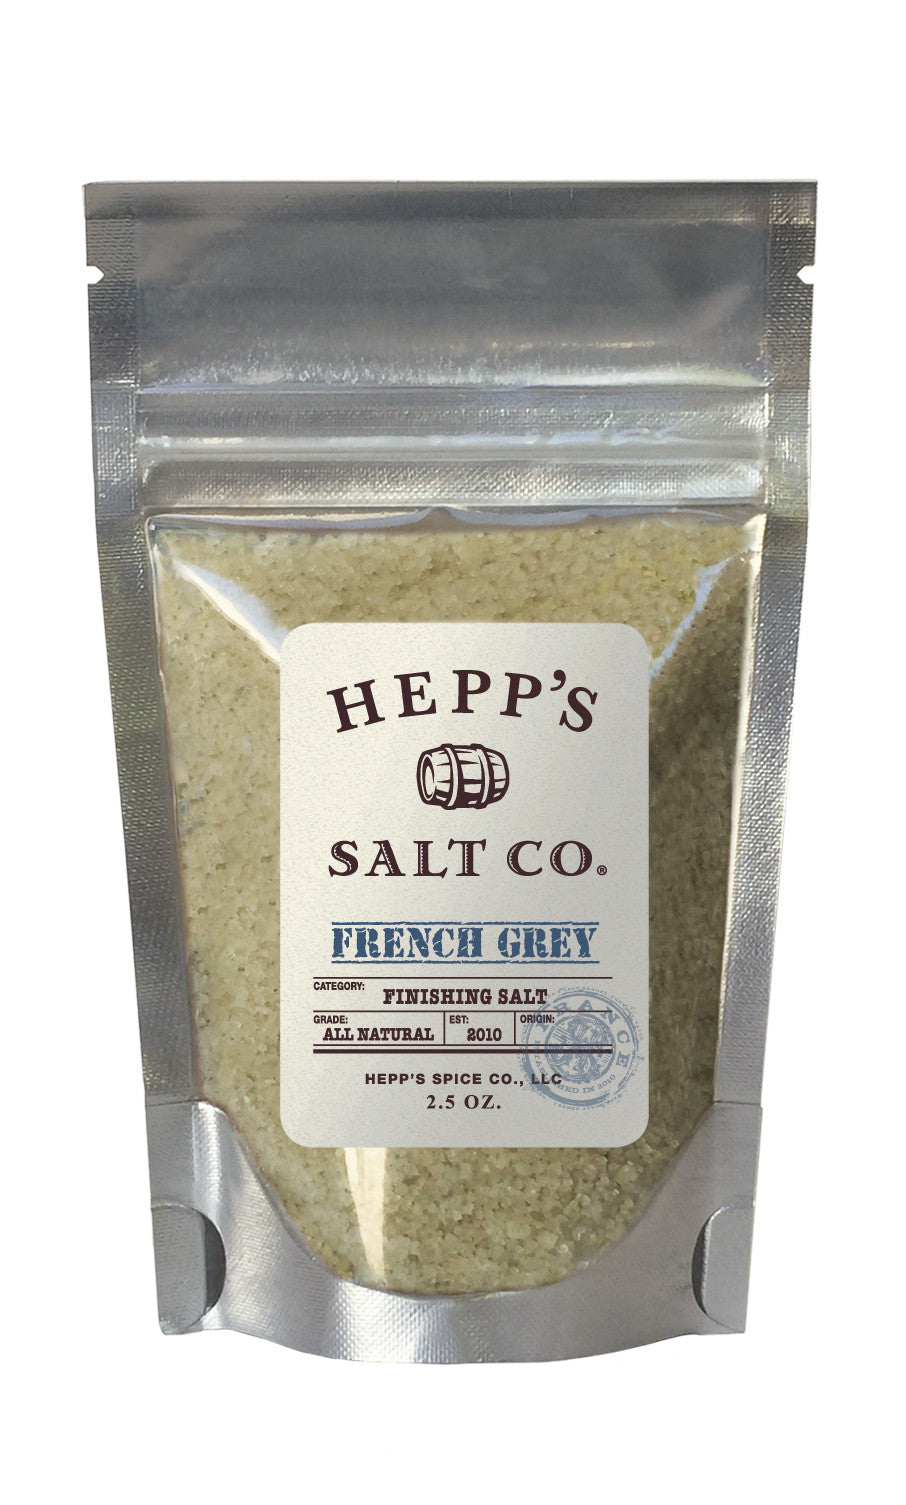 Sel Gris Sea Salt - HEPPS SALT CO. 